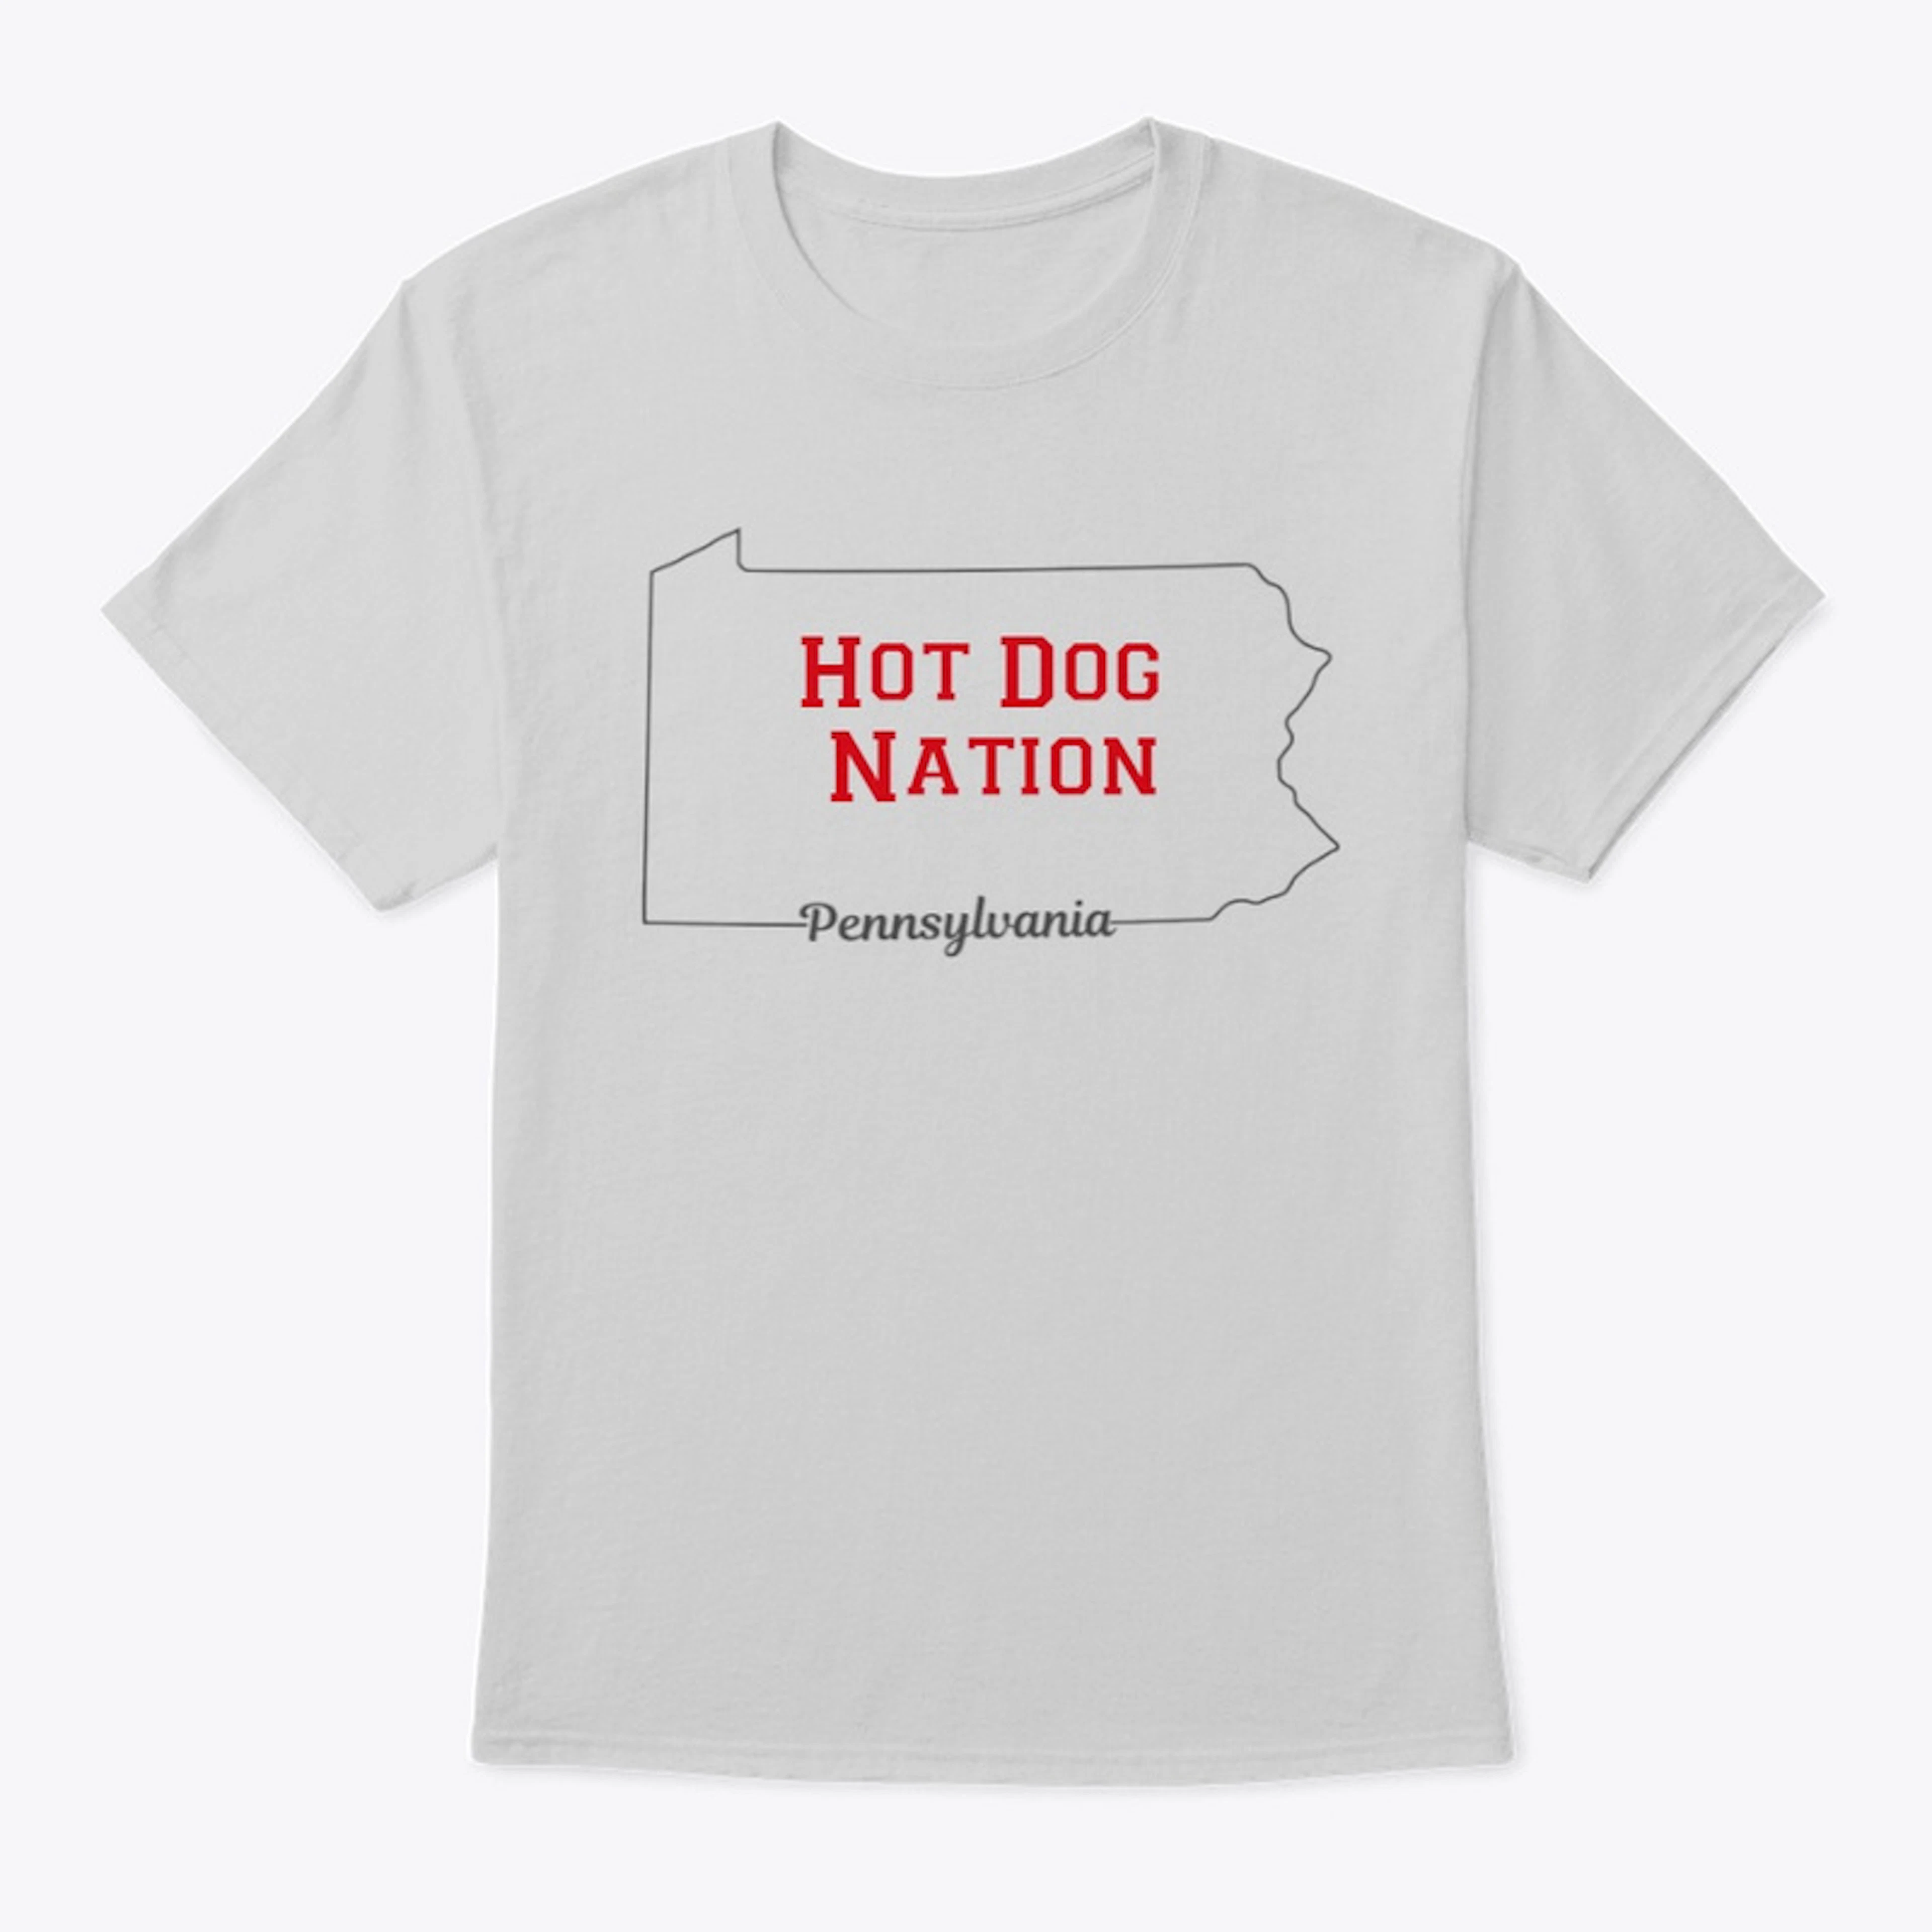 Hot Dog Nation - Pennsylvania